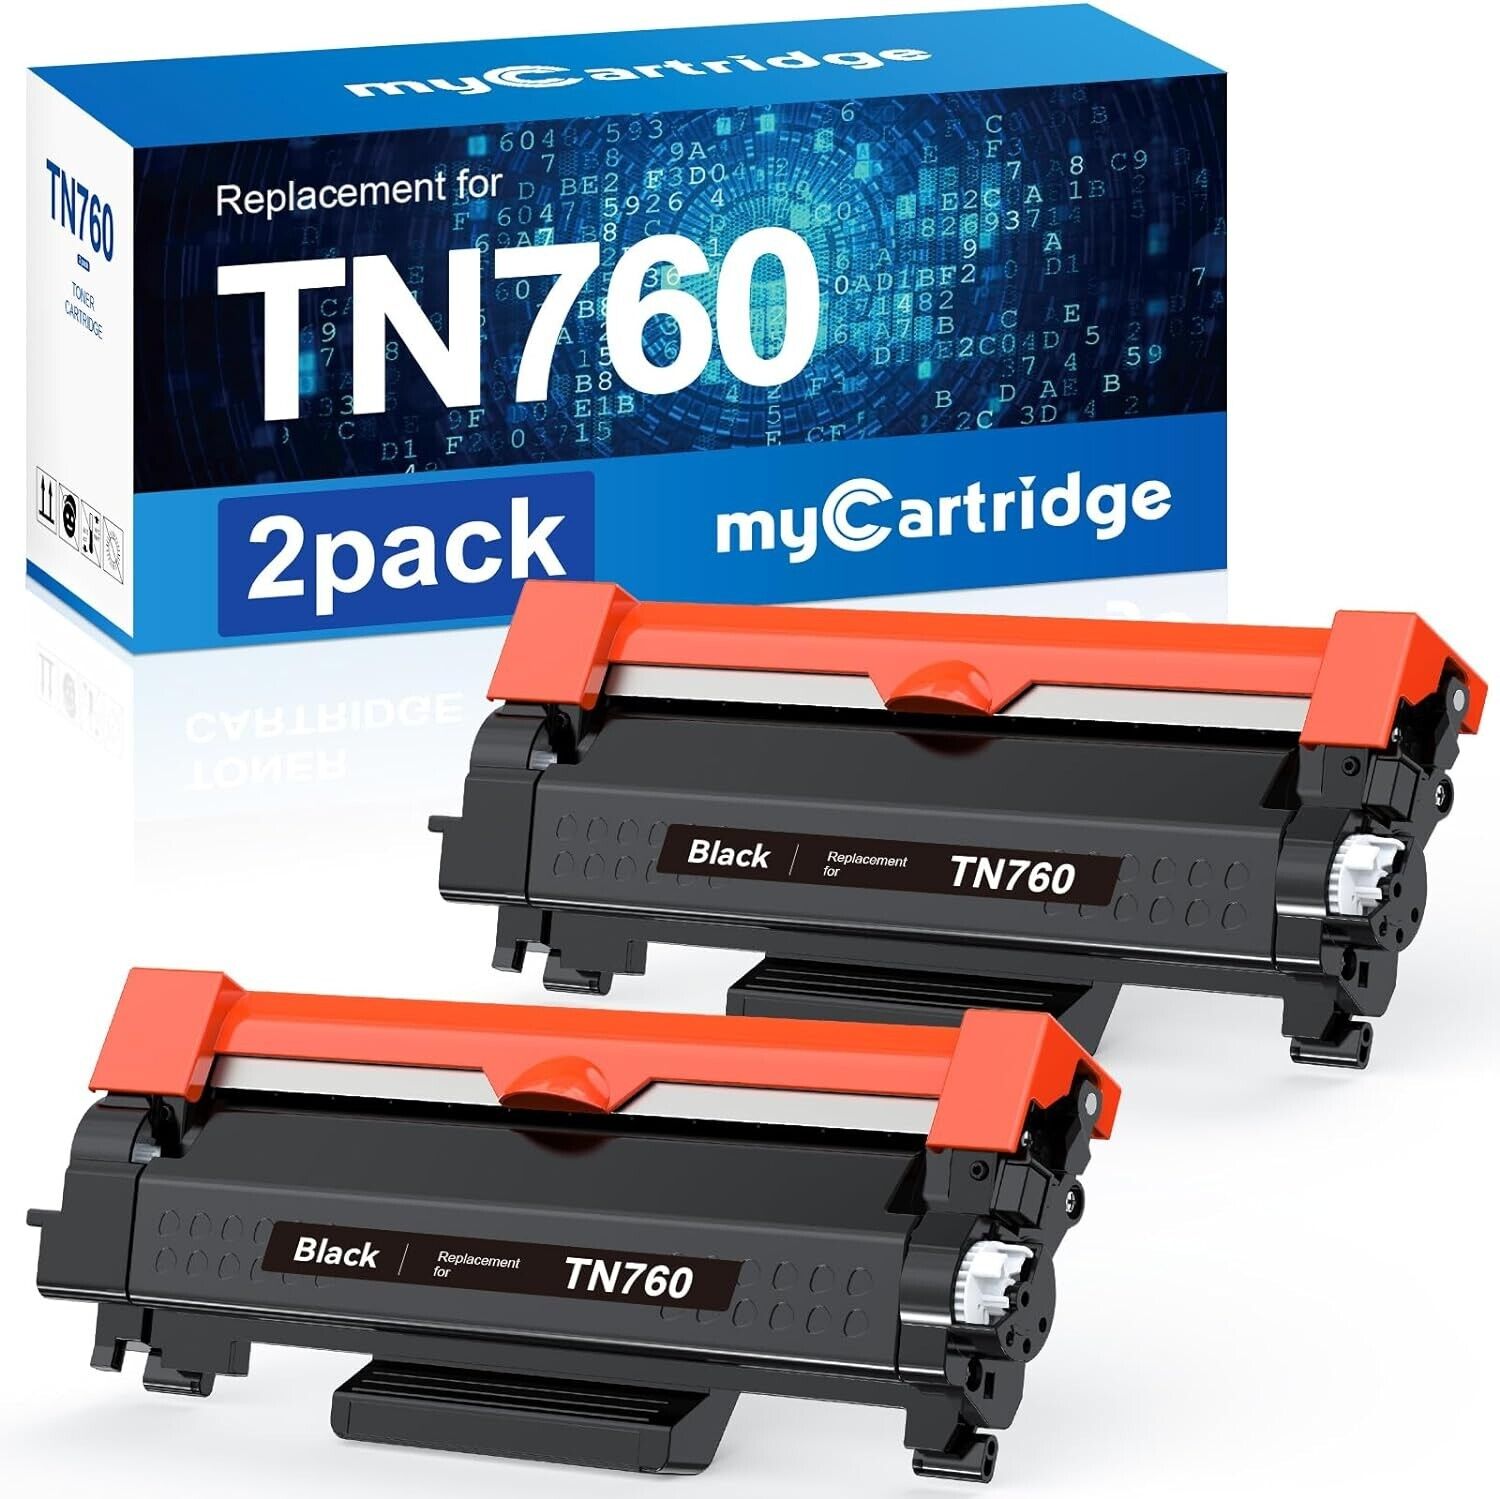 myCartridge Toner Cartridge Replacement for Brother TN760 TN-760 TN730